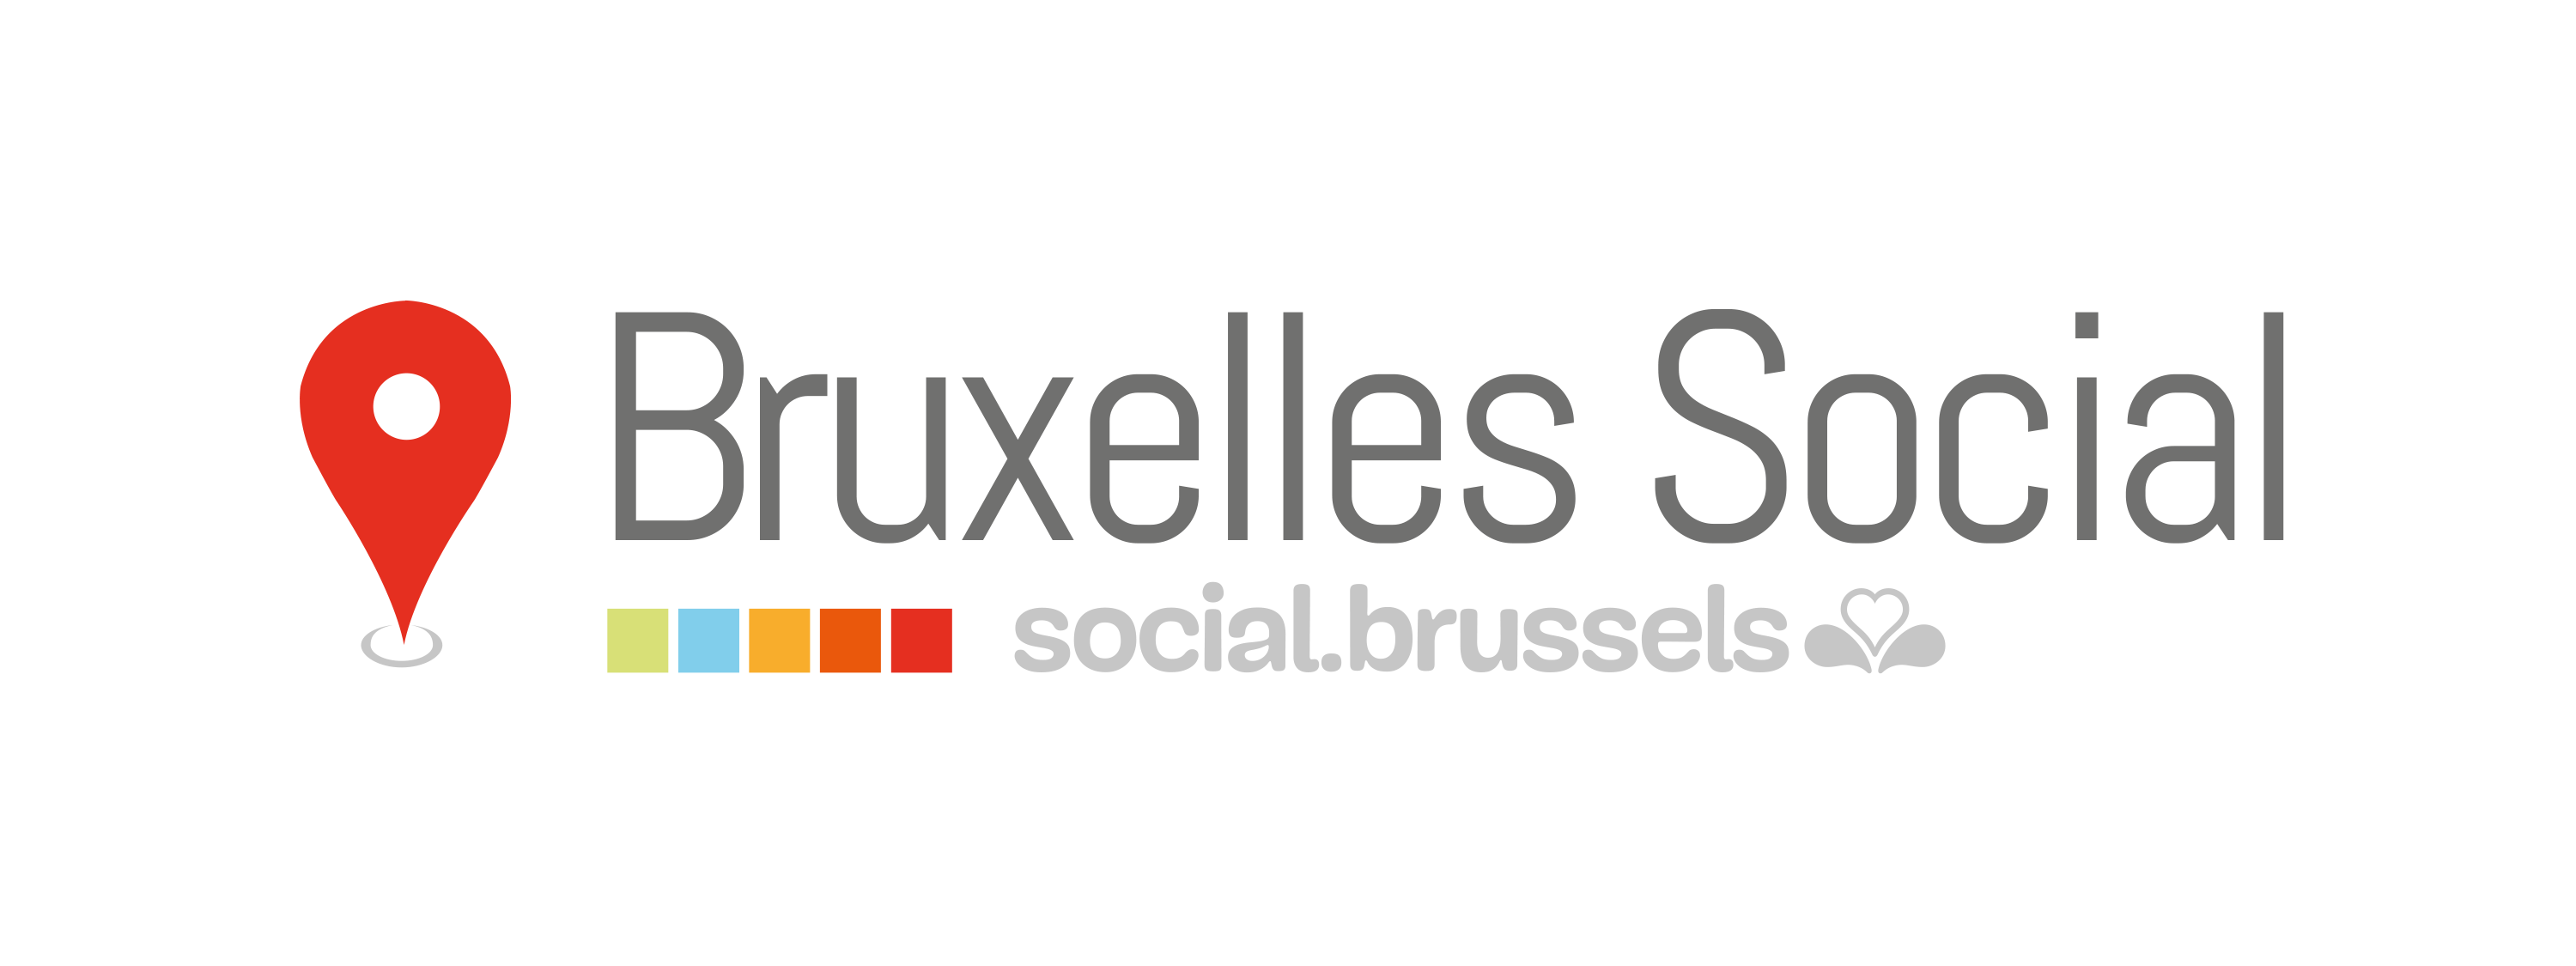 logo social brussels